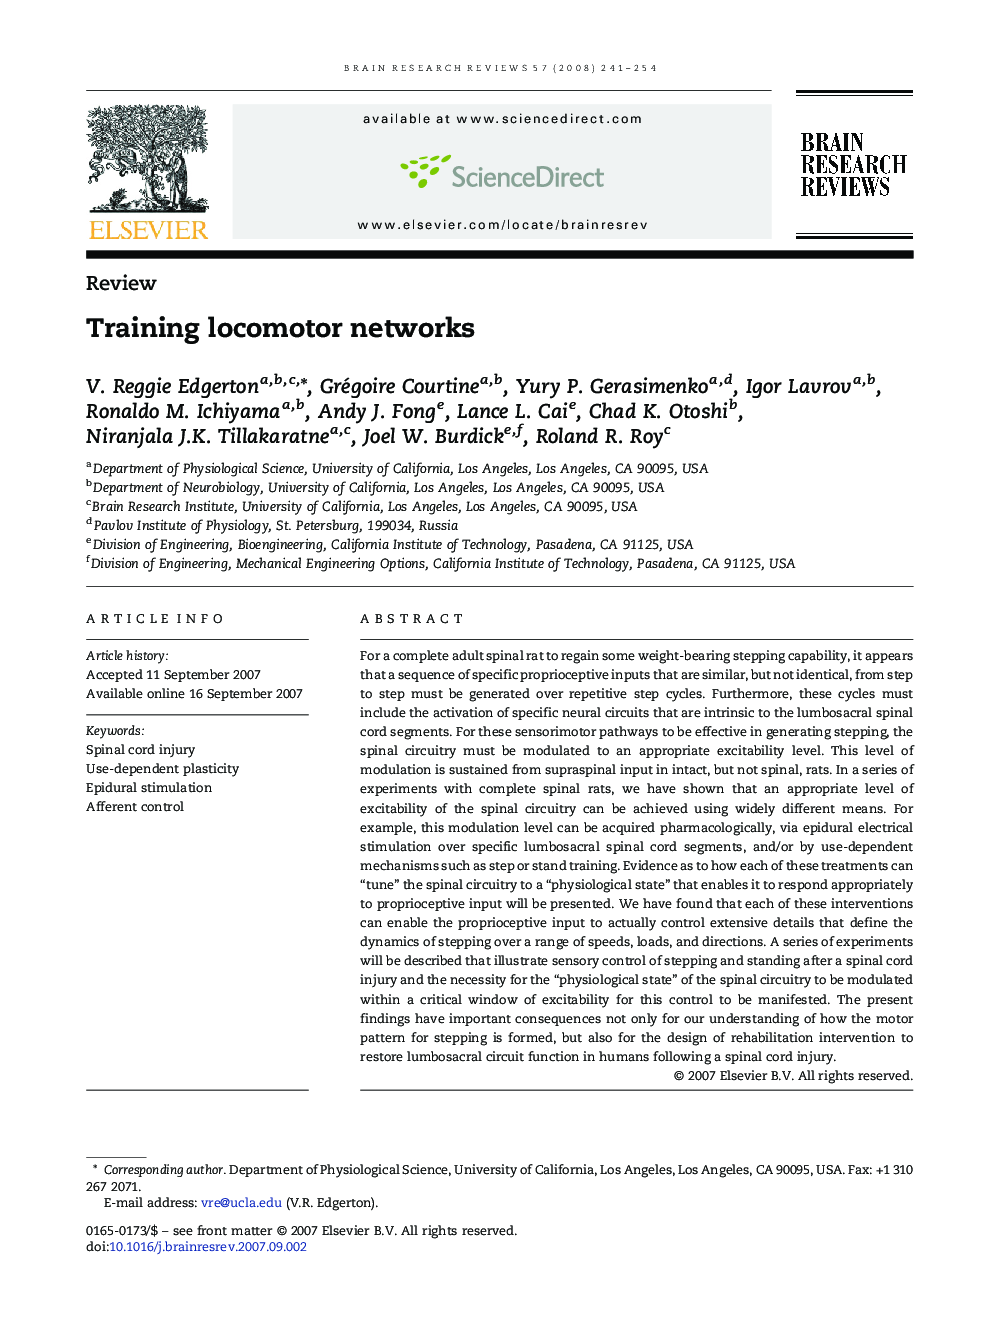 Training locomotor networks